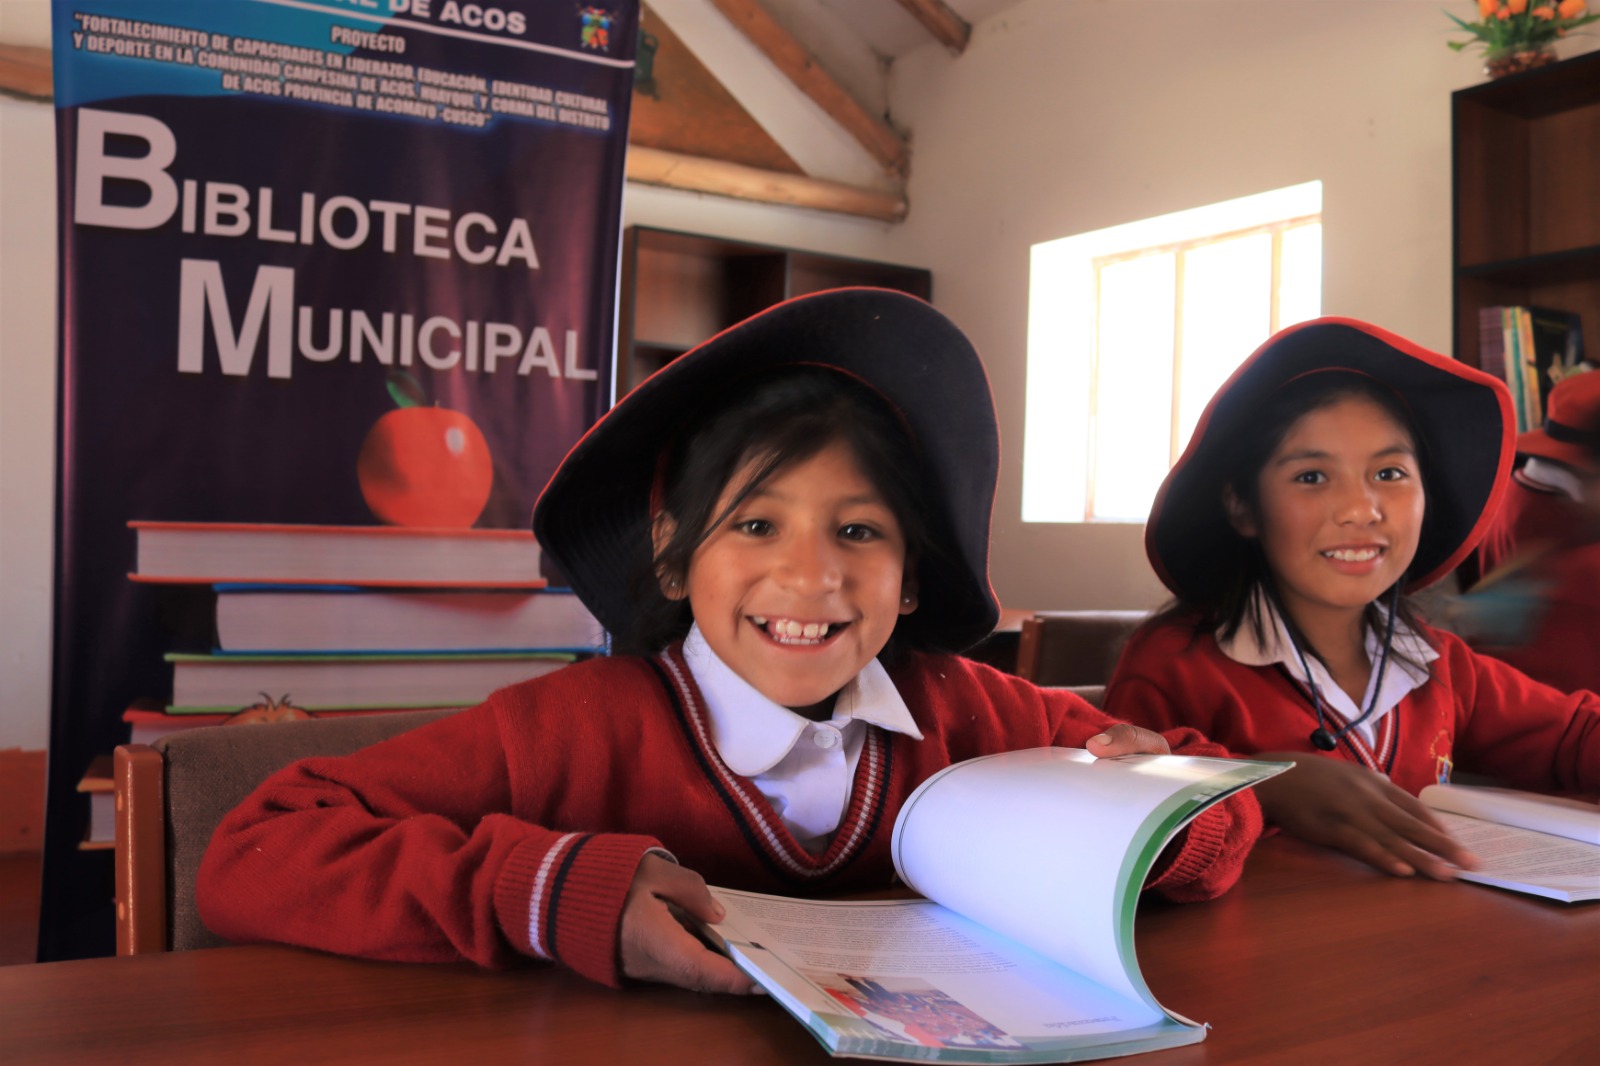 Gobierno Regional Cusco dona 300 libros a la Biblioteca Municipal de Acos